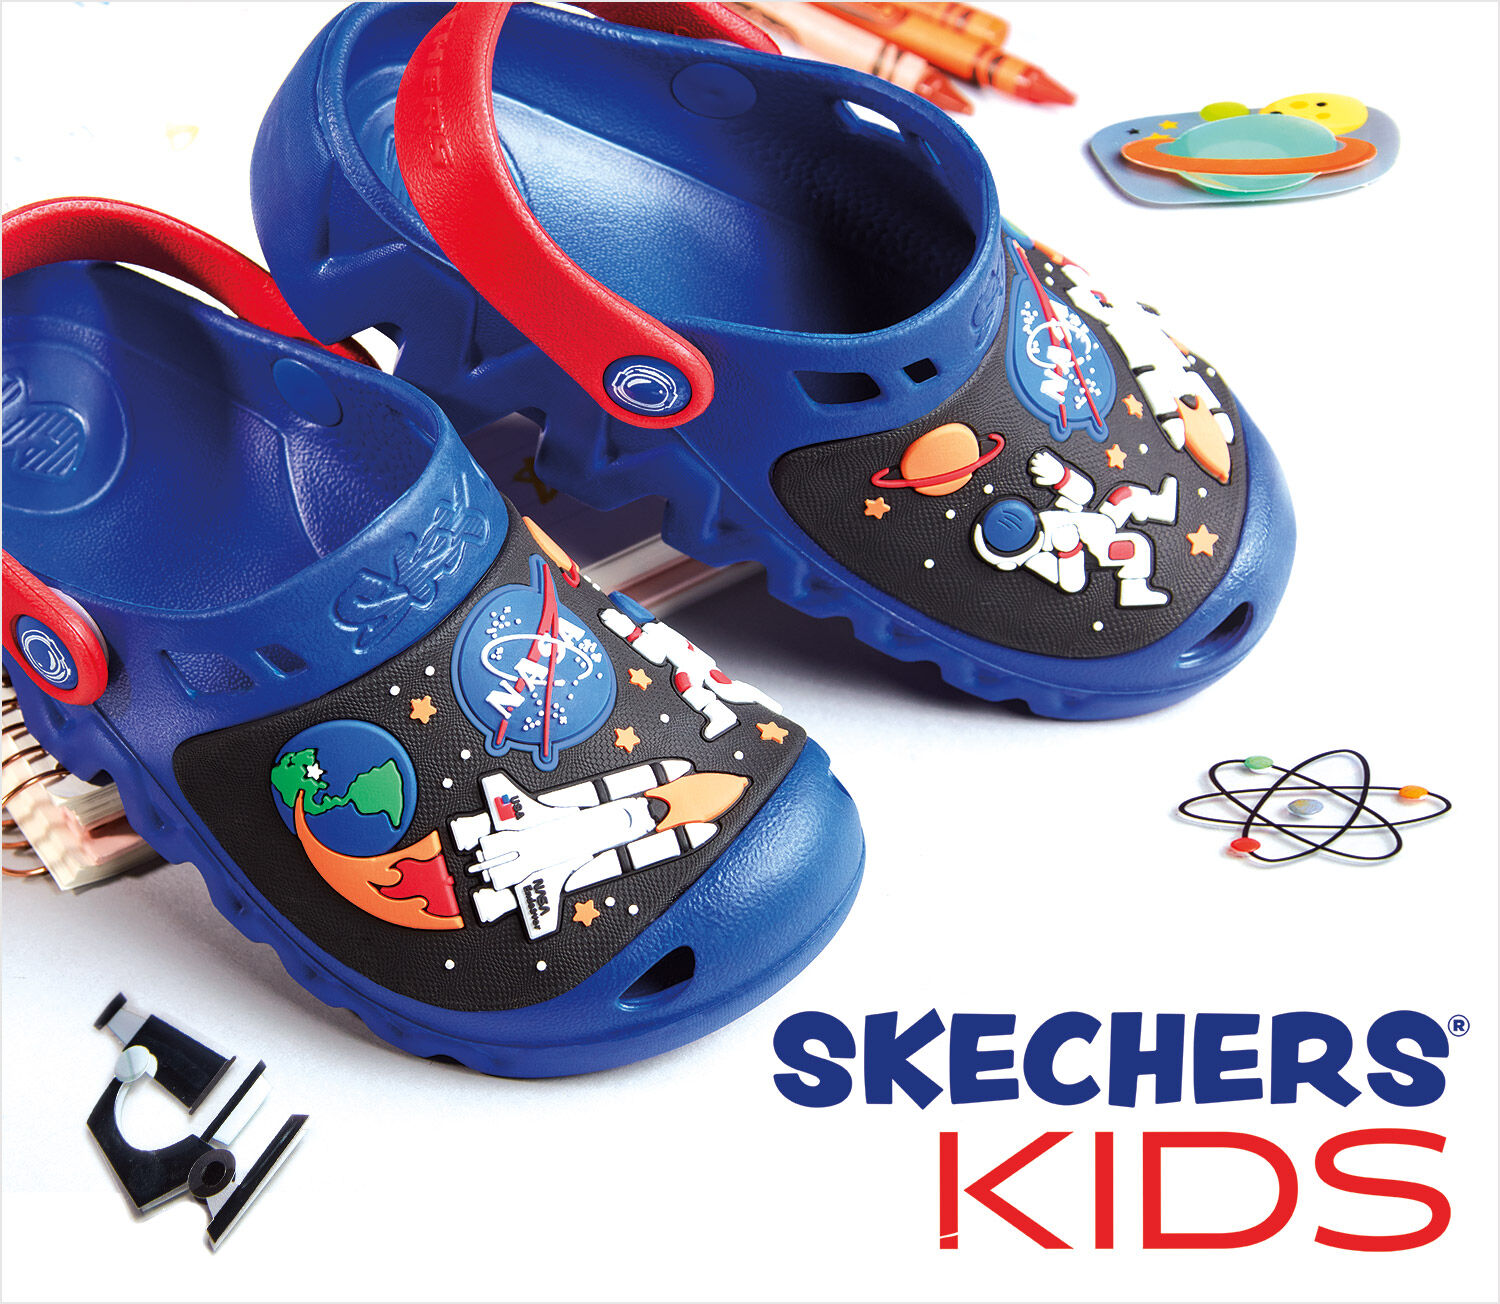 skechers childrens shoes nz